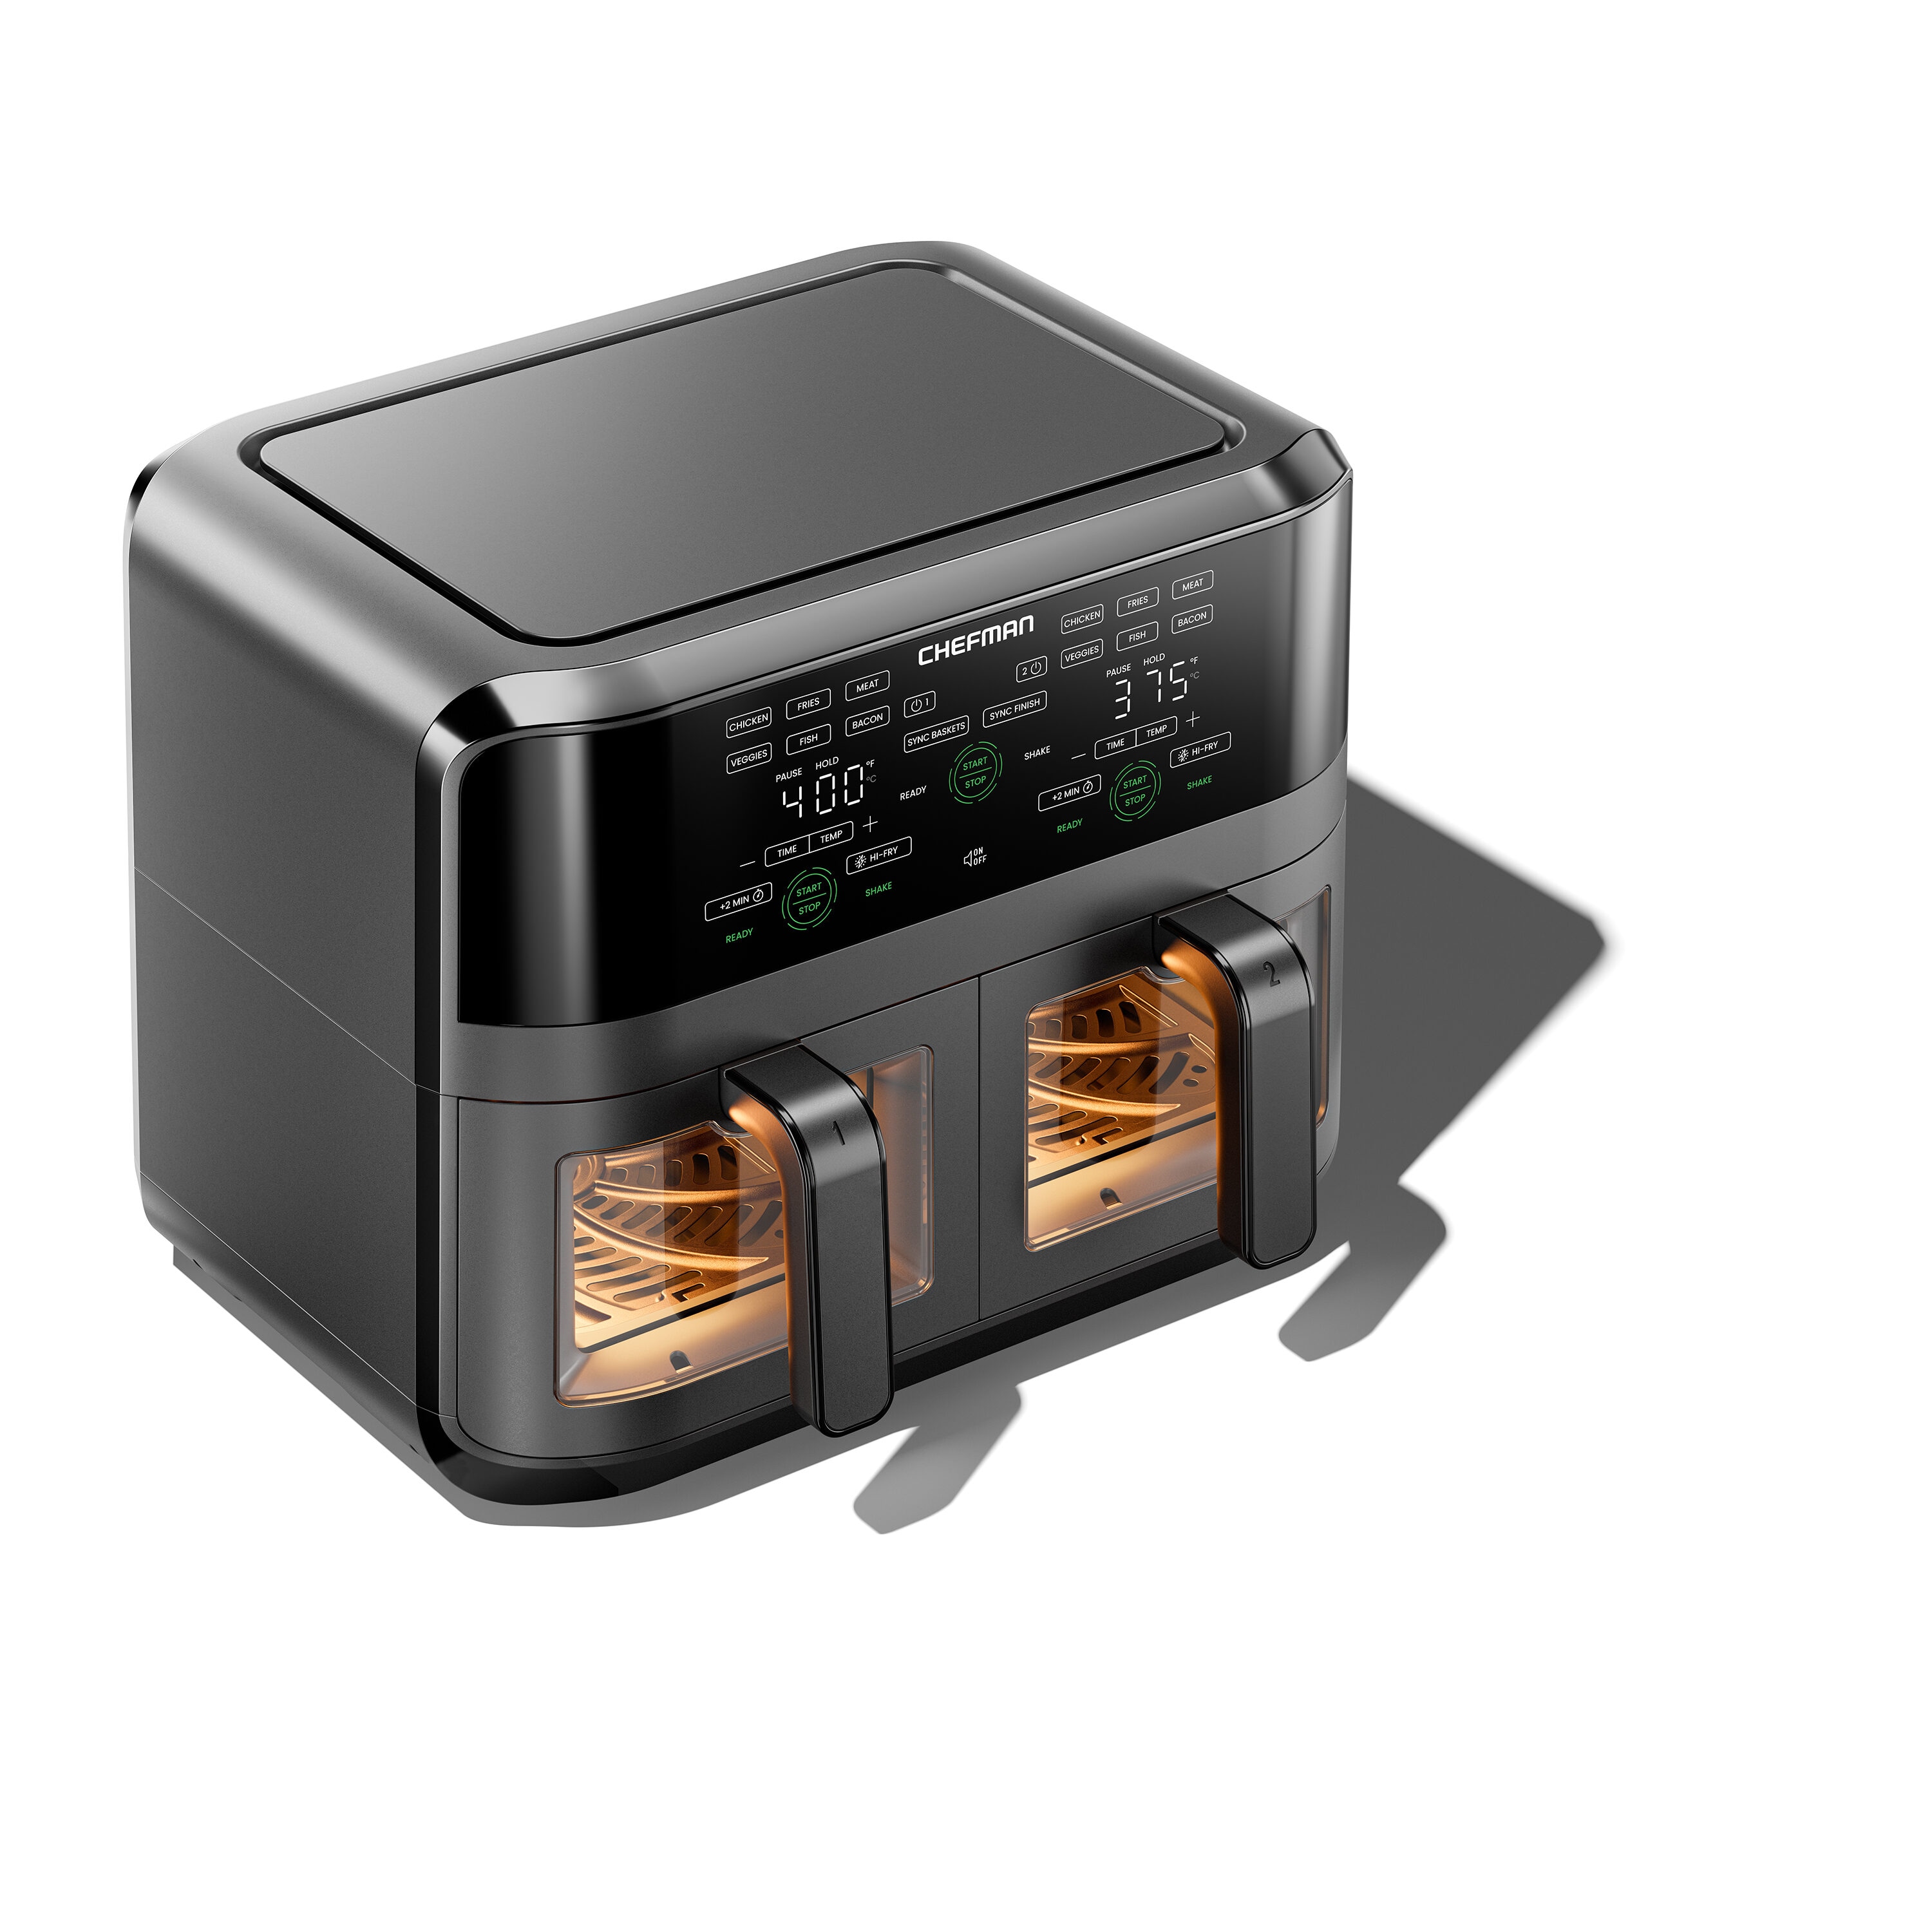 Chefman TurboFry Air Fryer 4.5 Quart Air Fryer Review - Consumer